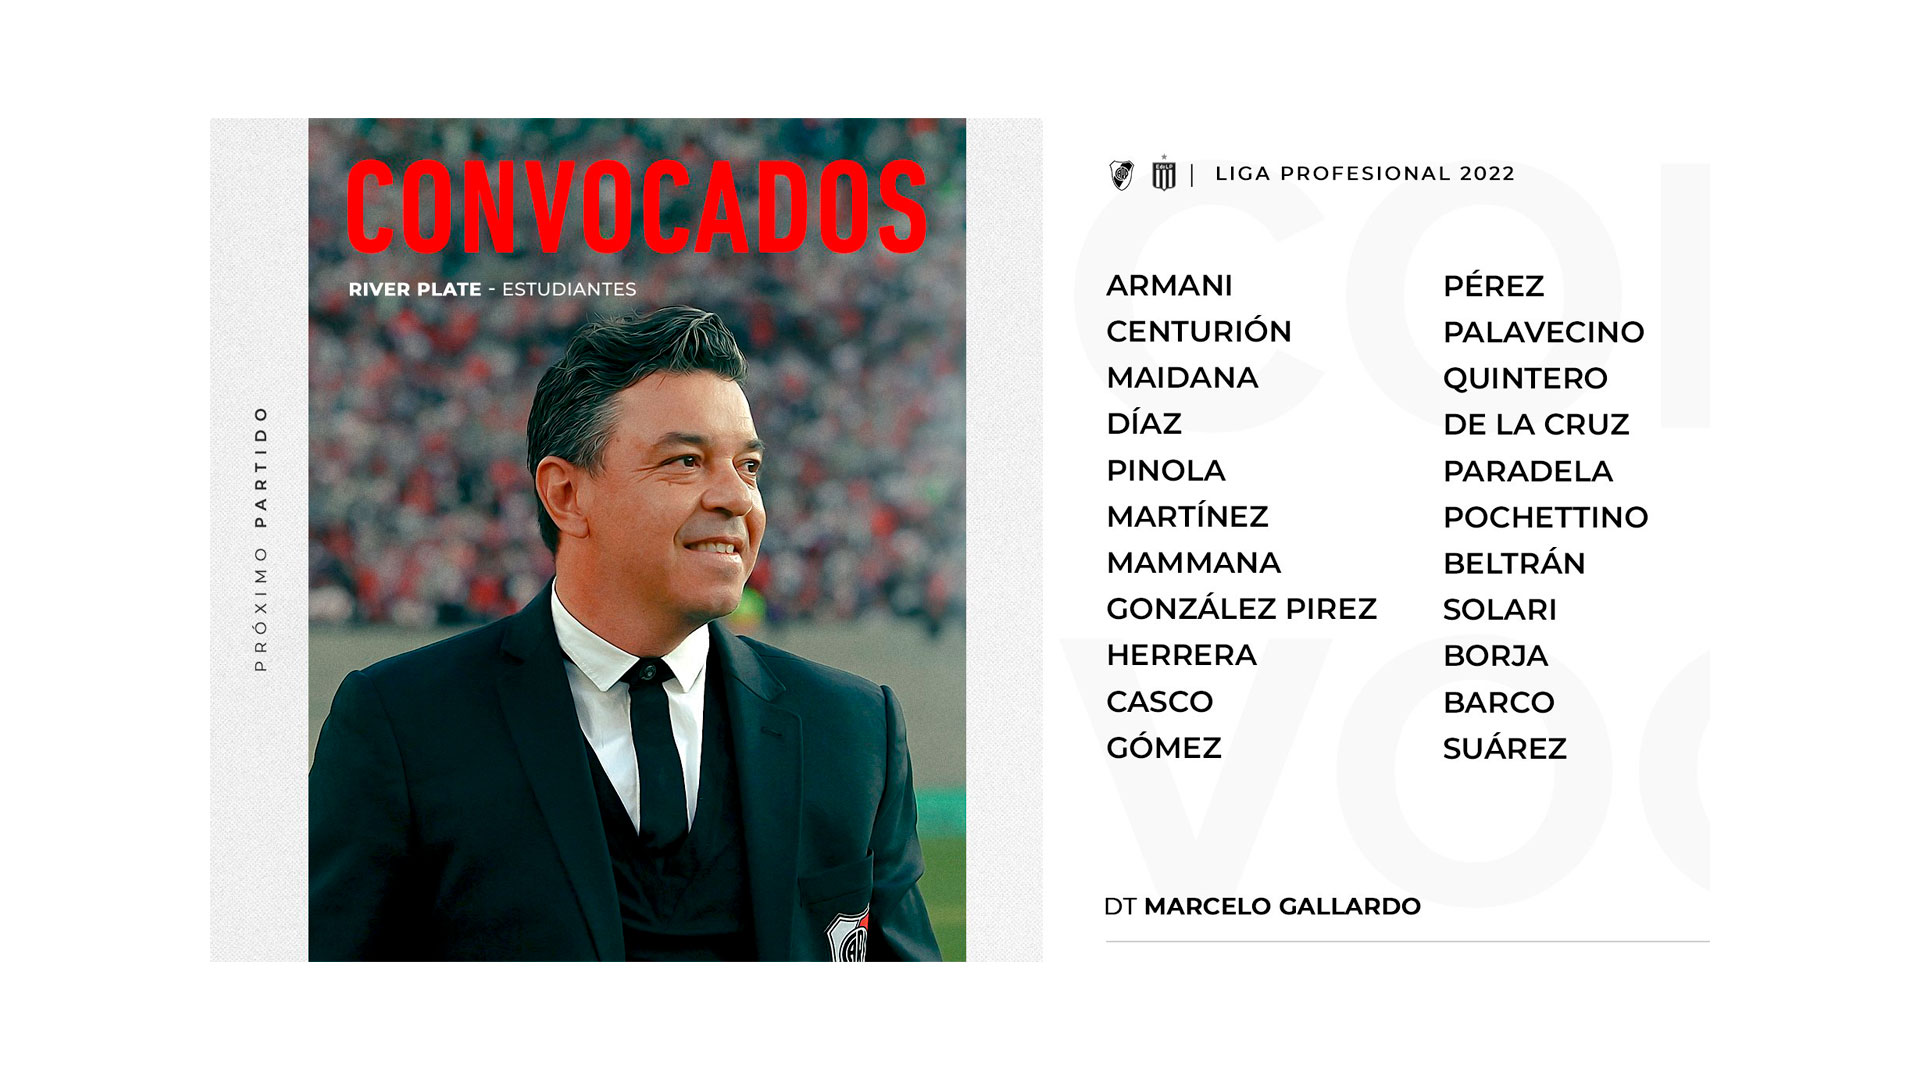 Marcelo Gallardos lagliste for å møte Estudiantes